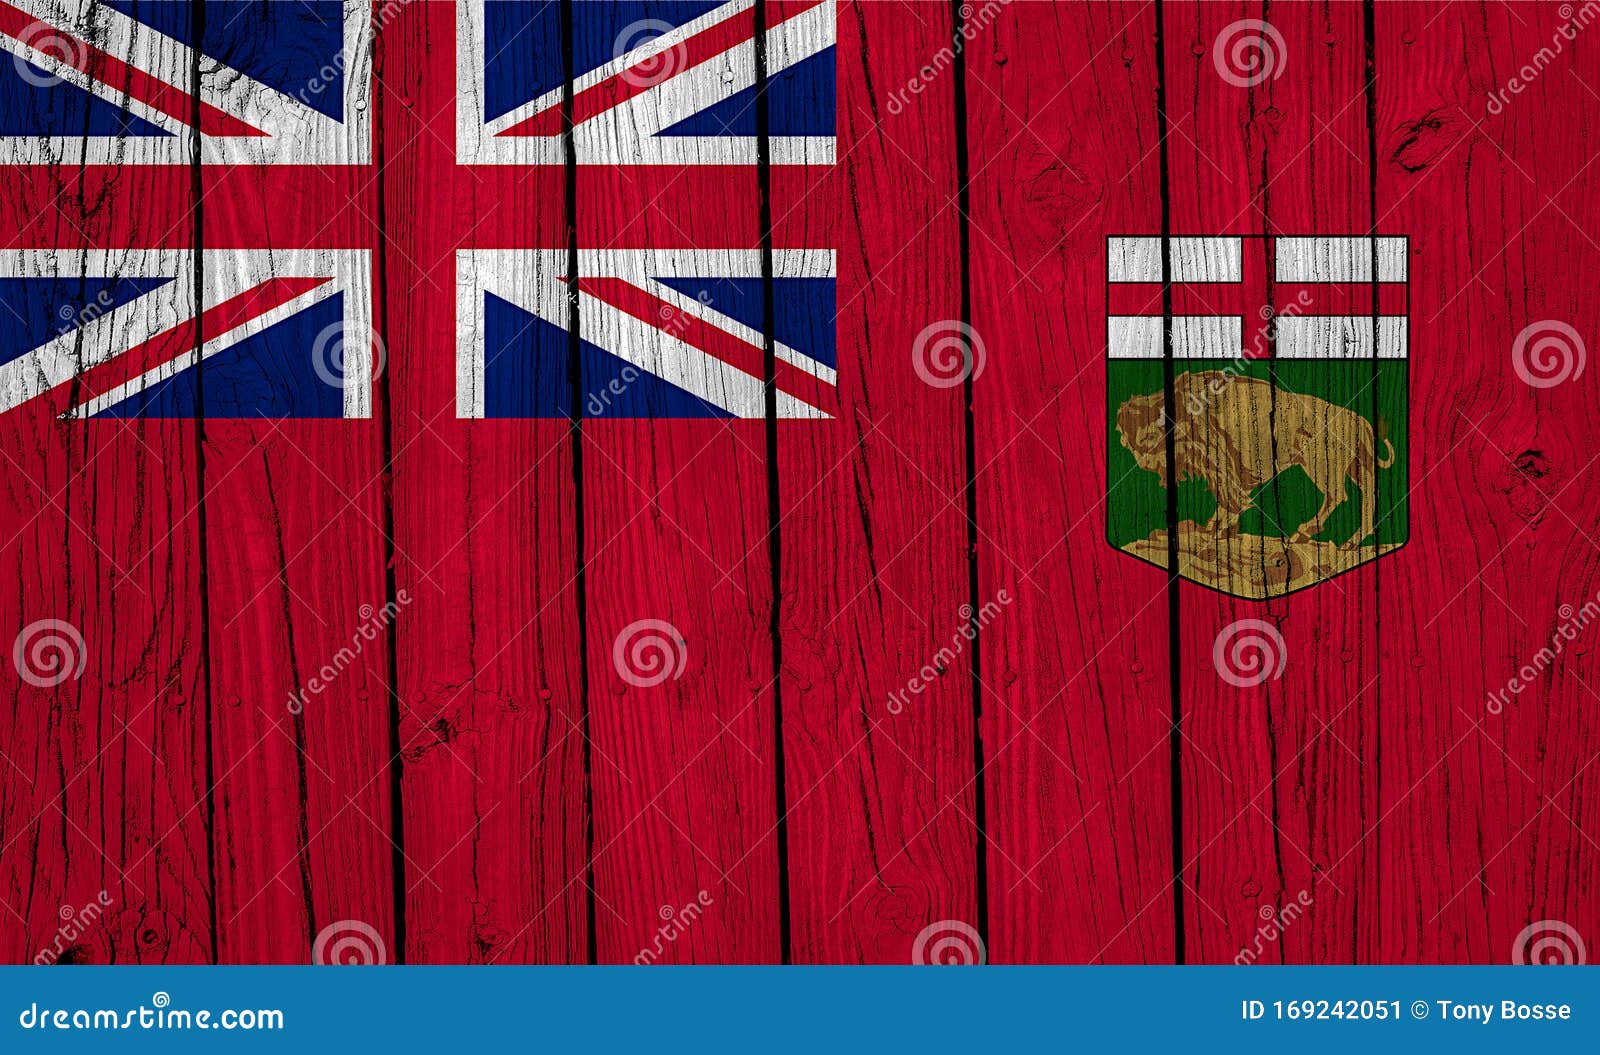 manitoba flag over wood planks